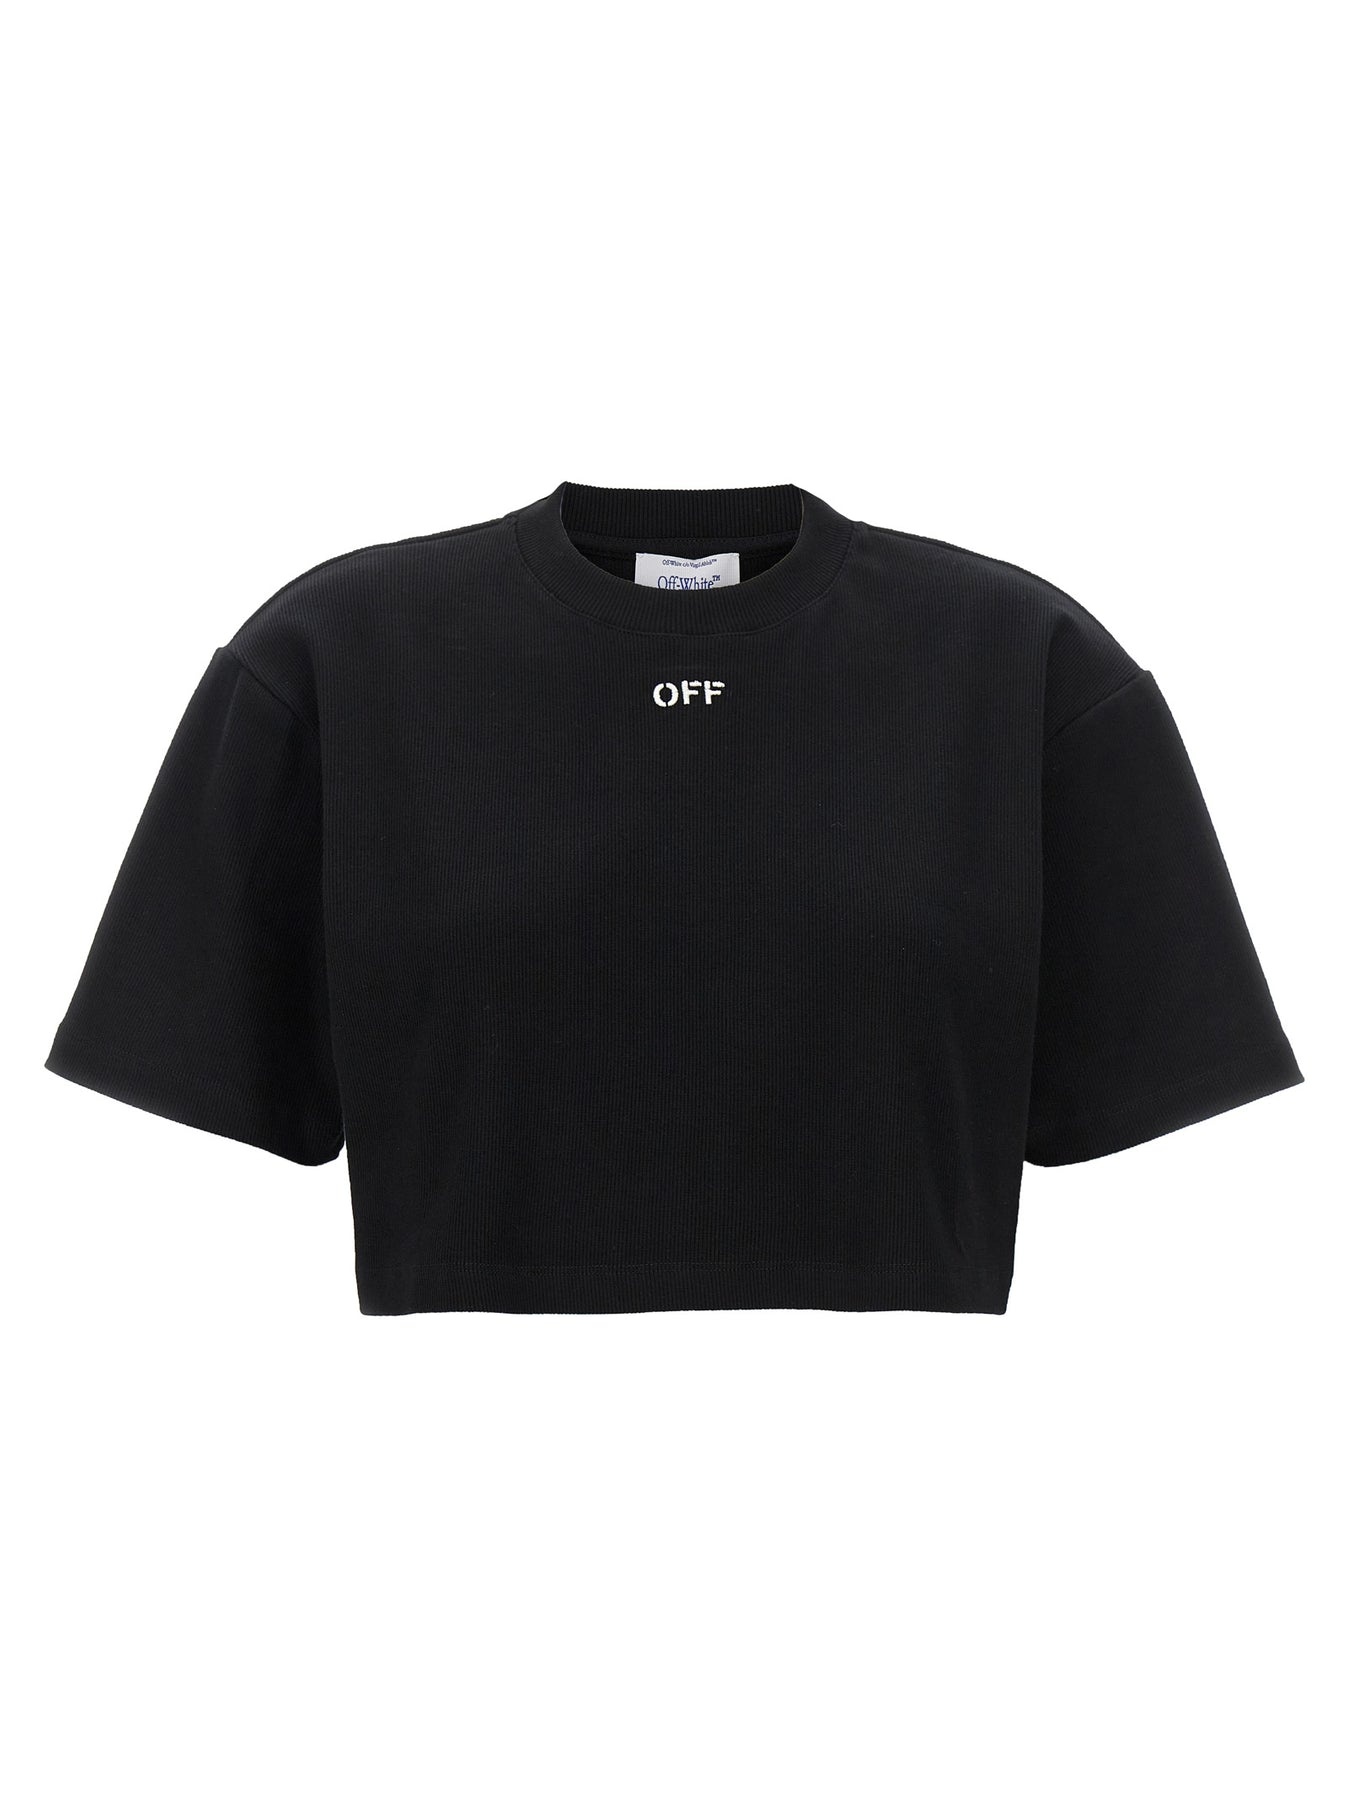 Off Stamp T-Shirt Black - 1